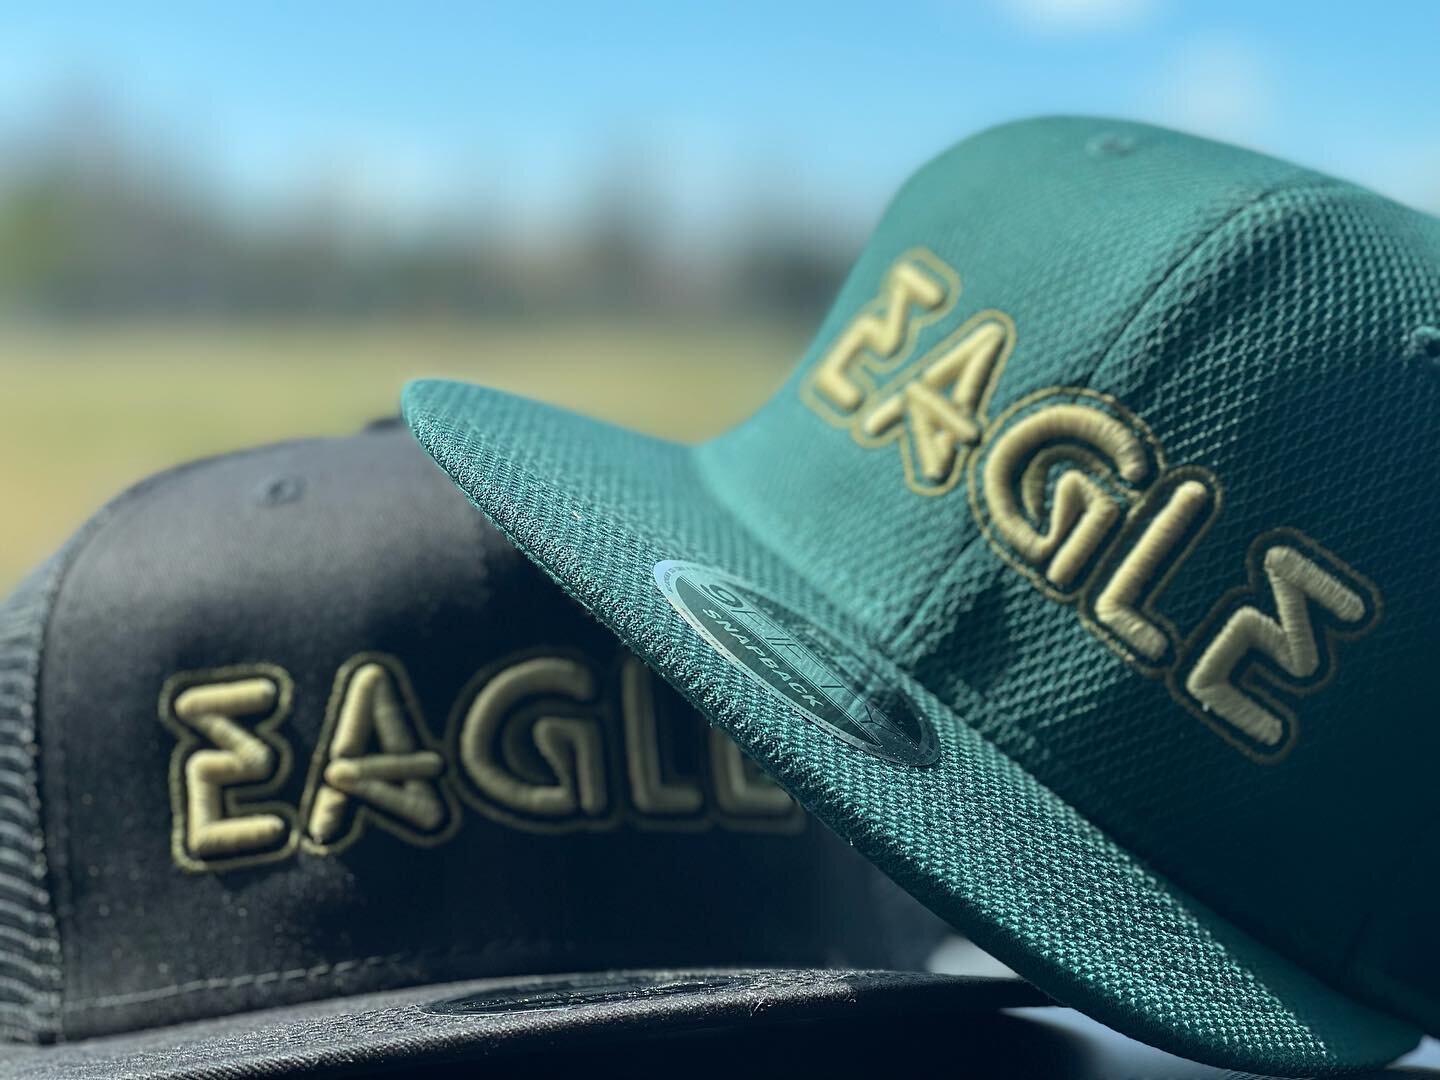 The EAGLE Hat Has Landed #allraddays
&bull;
&bull;
&bull;
Now online! Proceeds from each hat go to the Eagle Middle School Lacrosse Team #gomustangs #emslacrosse #limitedrunsofrad #hat #neweracap #eagle #idaho #eatshopeagle #eagleidaho